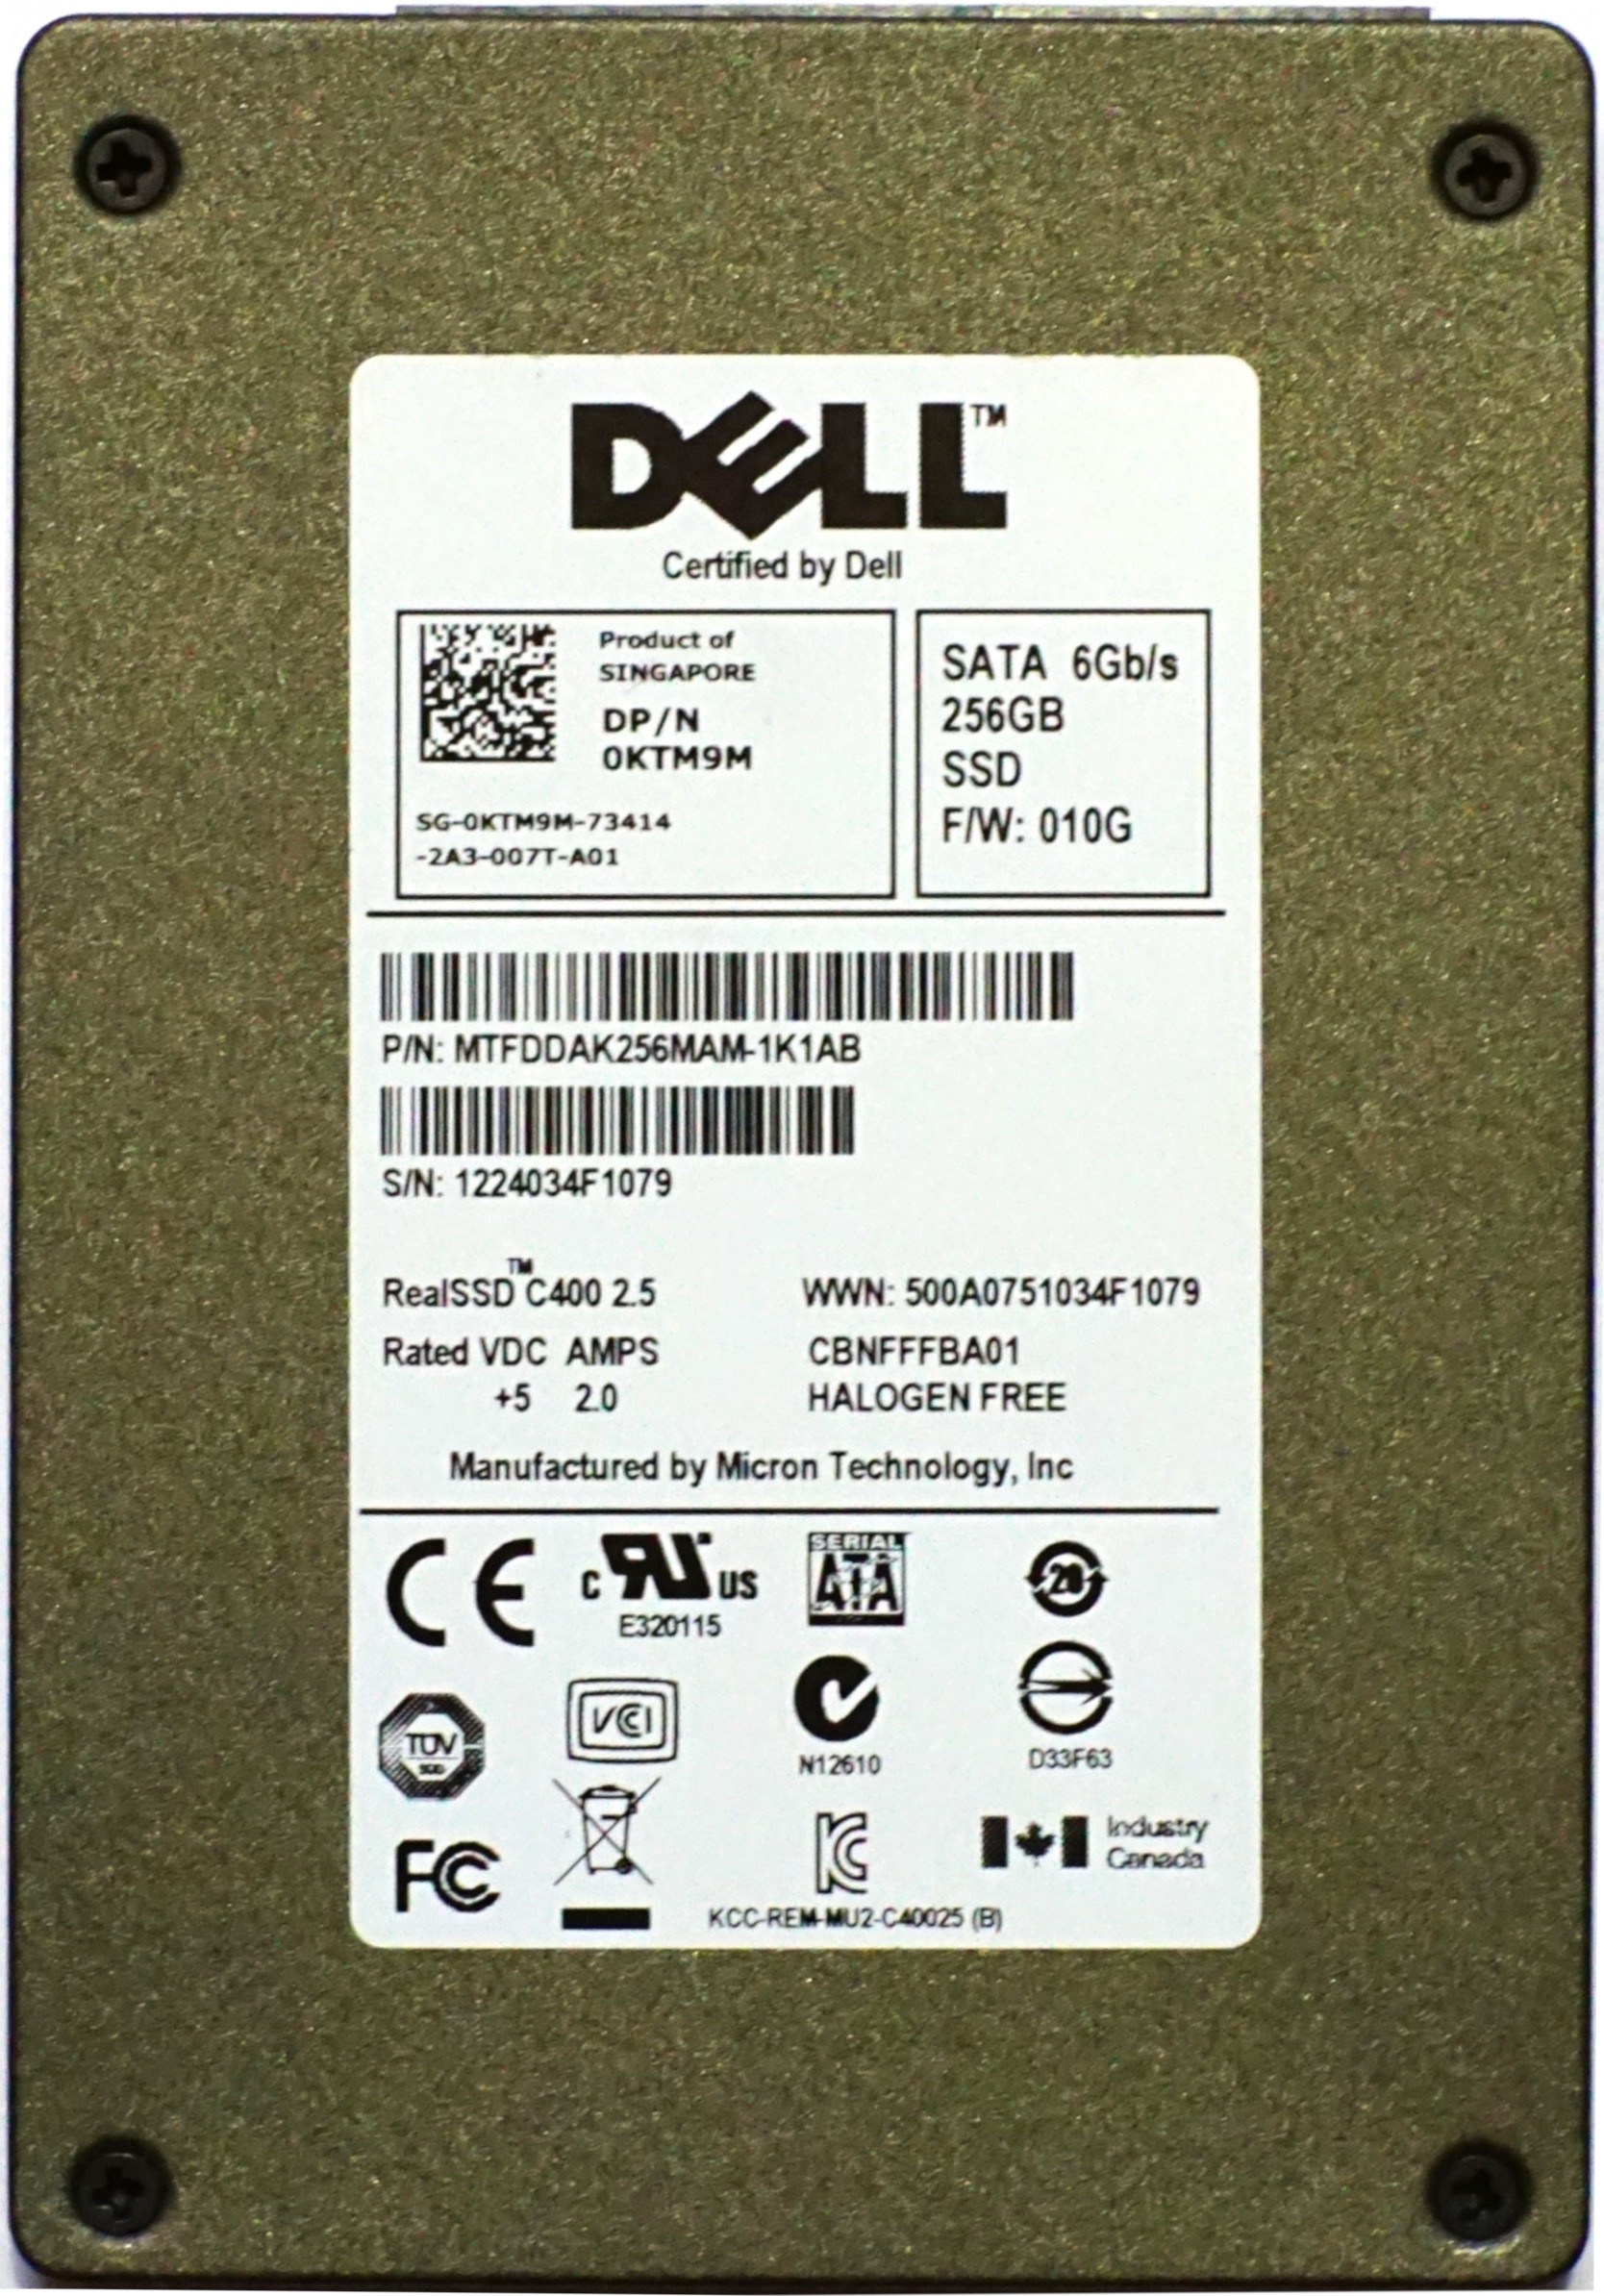 Dell (KTM9M) 256GB SATA III (SFF) 6Gb/s SSD